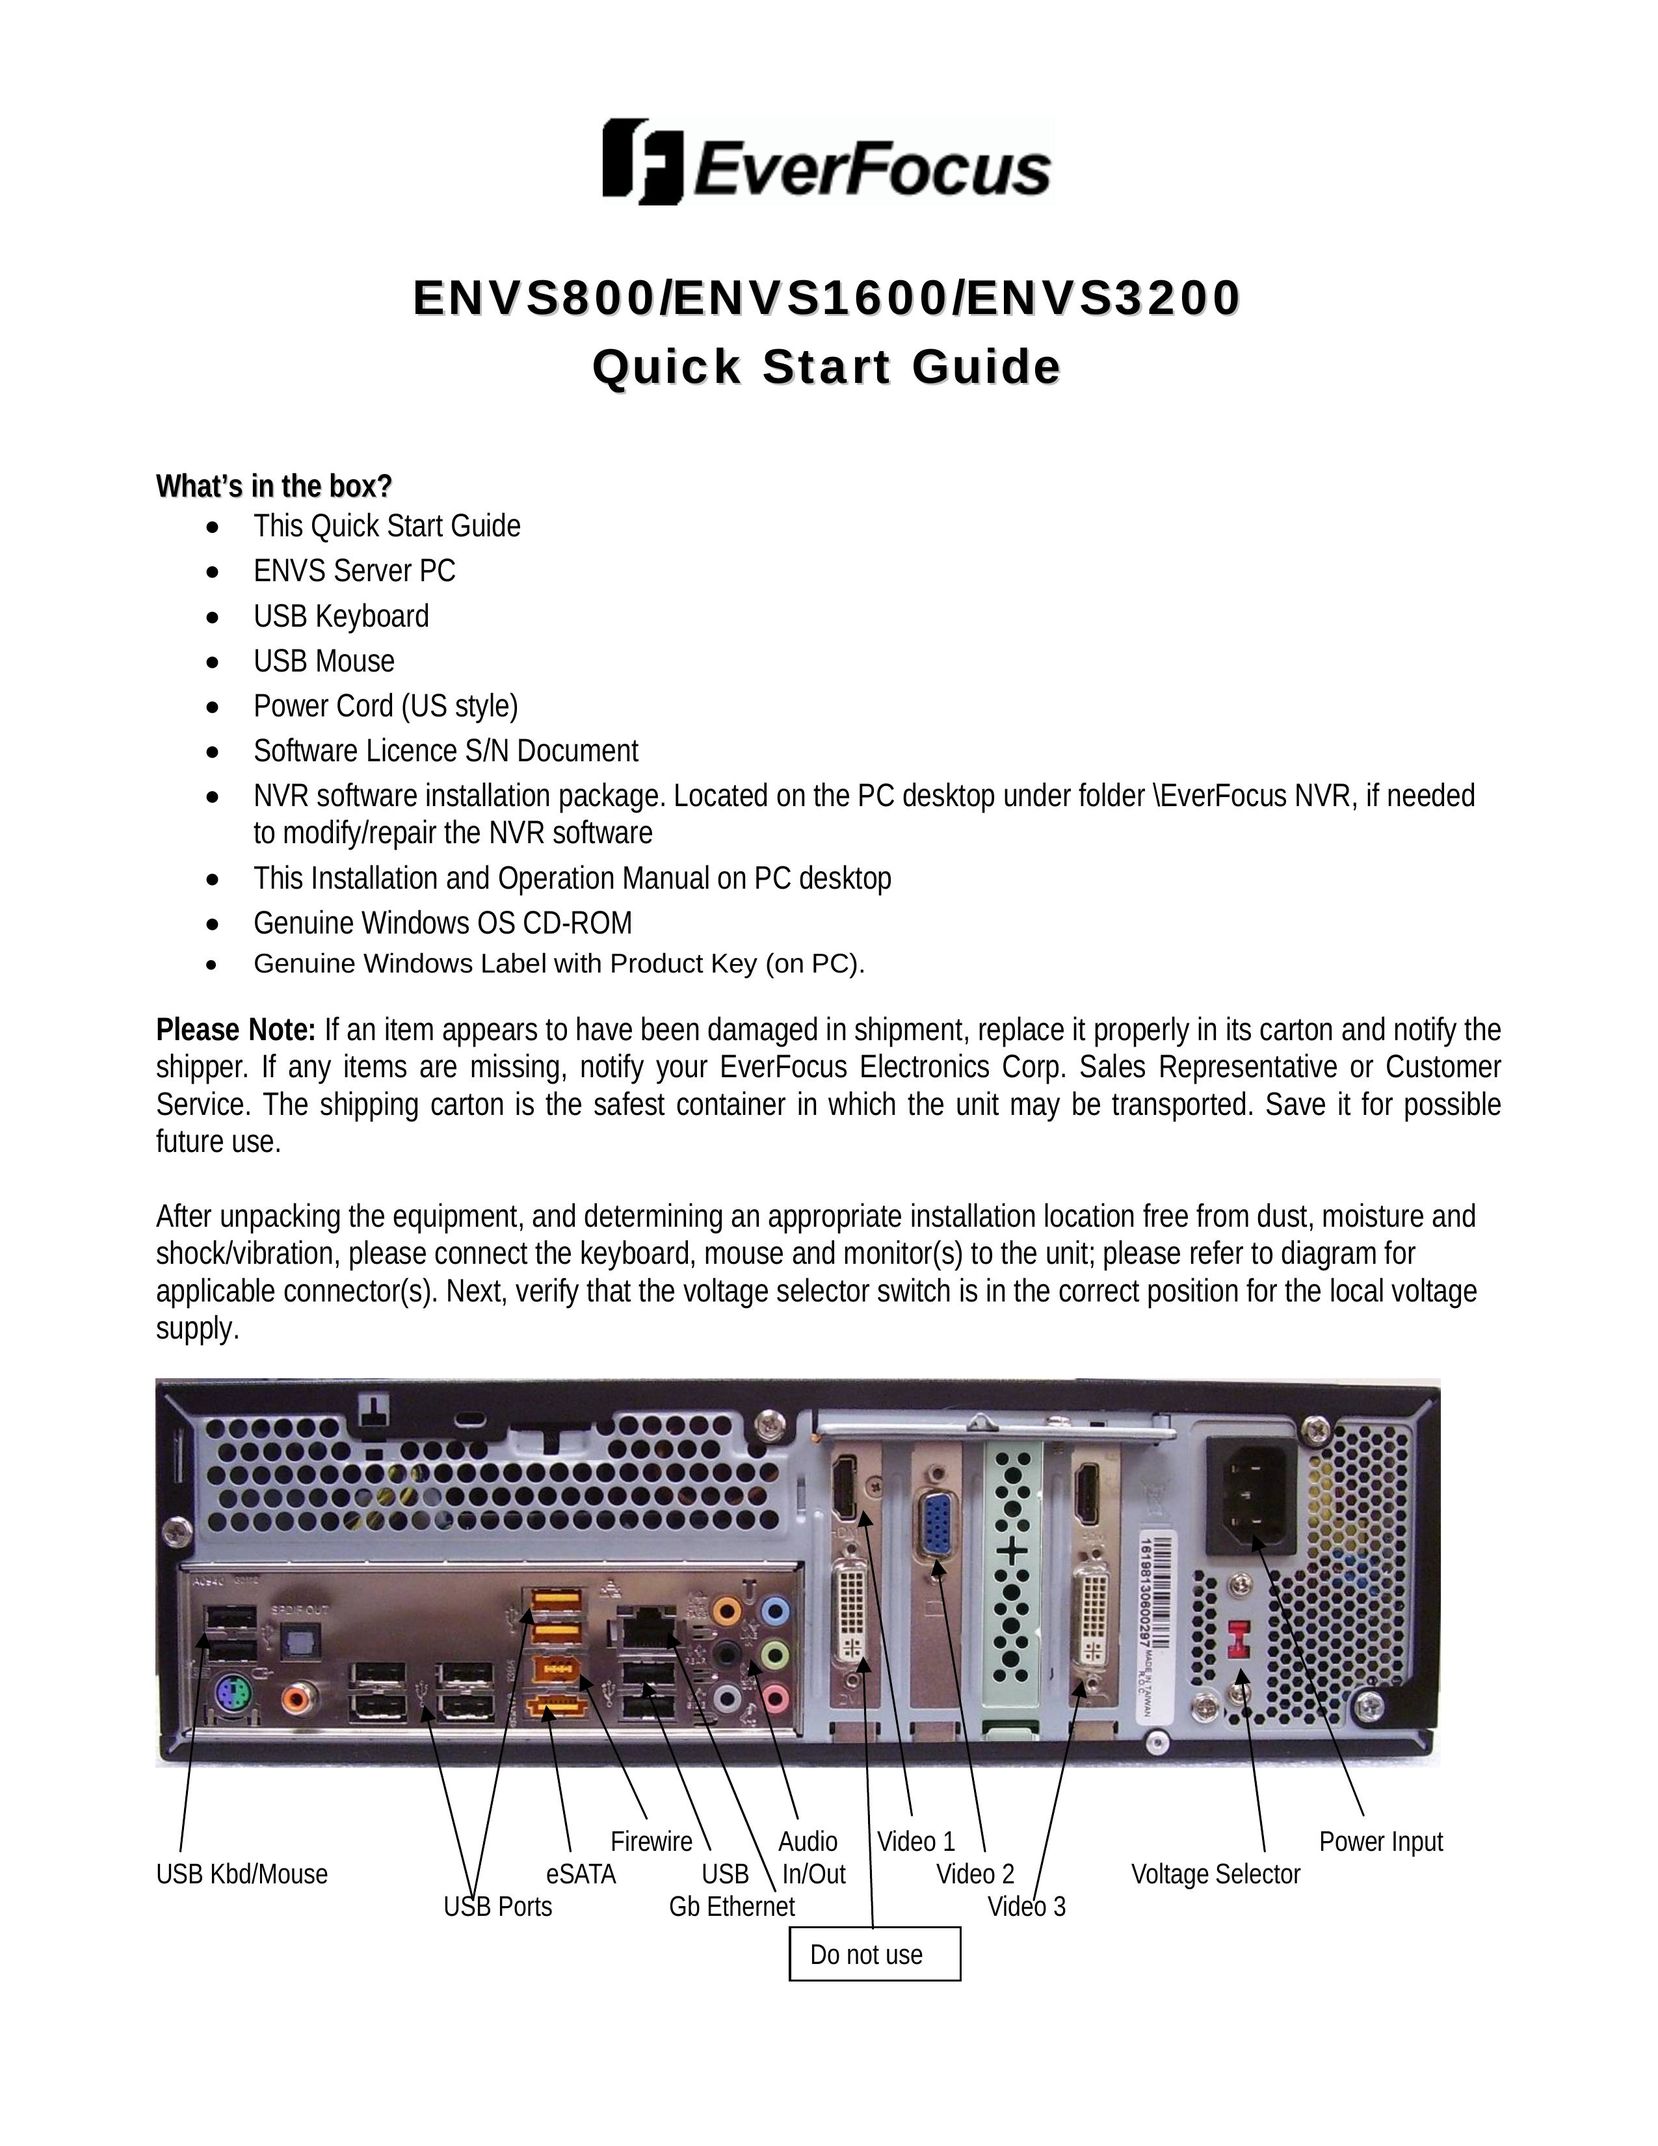 EverFocus ENVS800 Computer Hardware User Manual